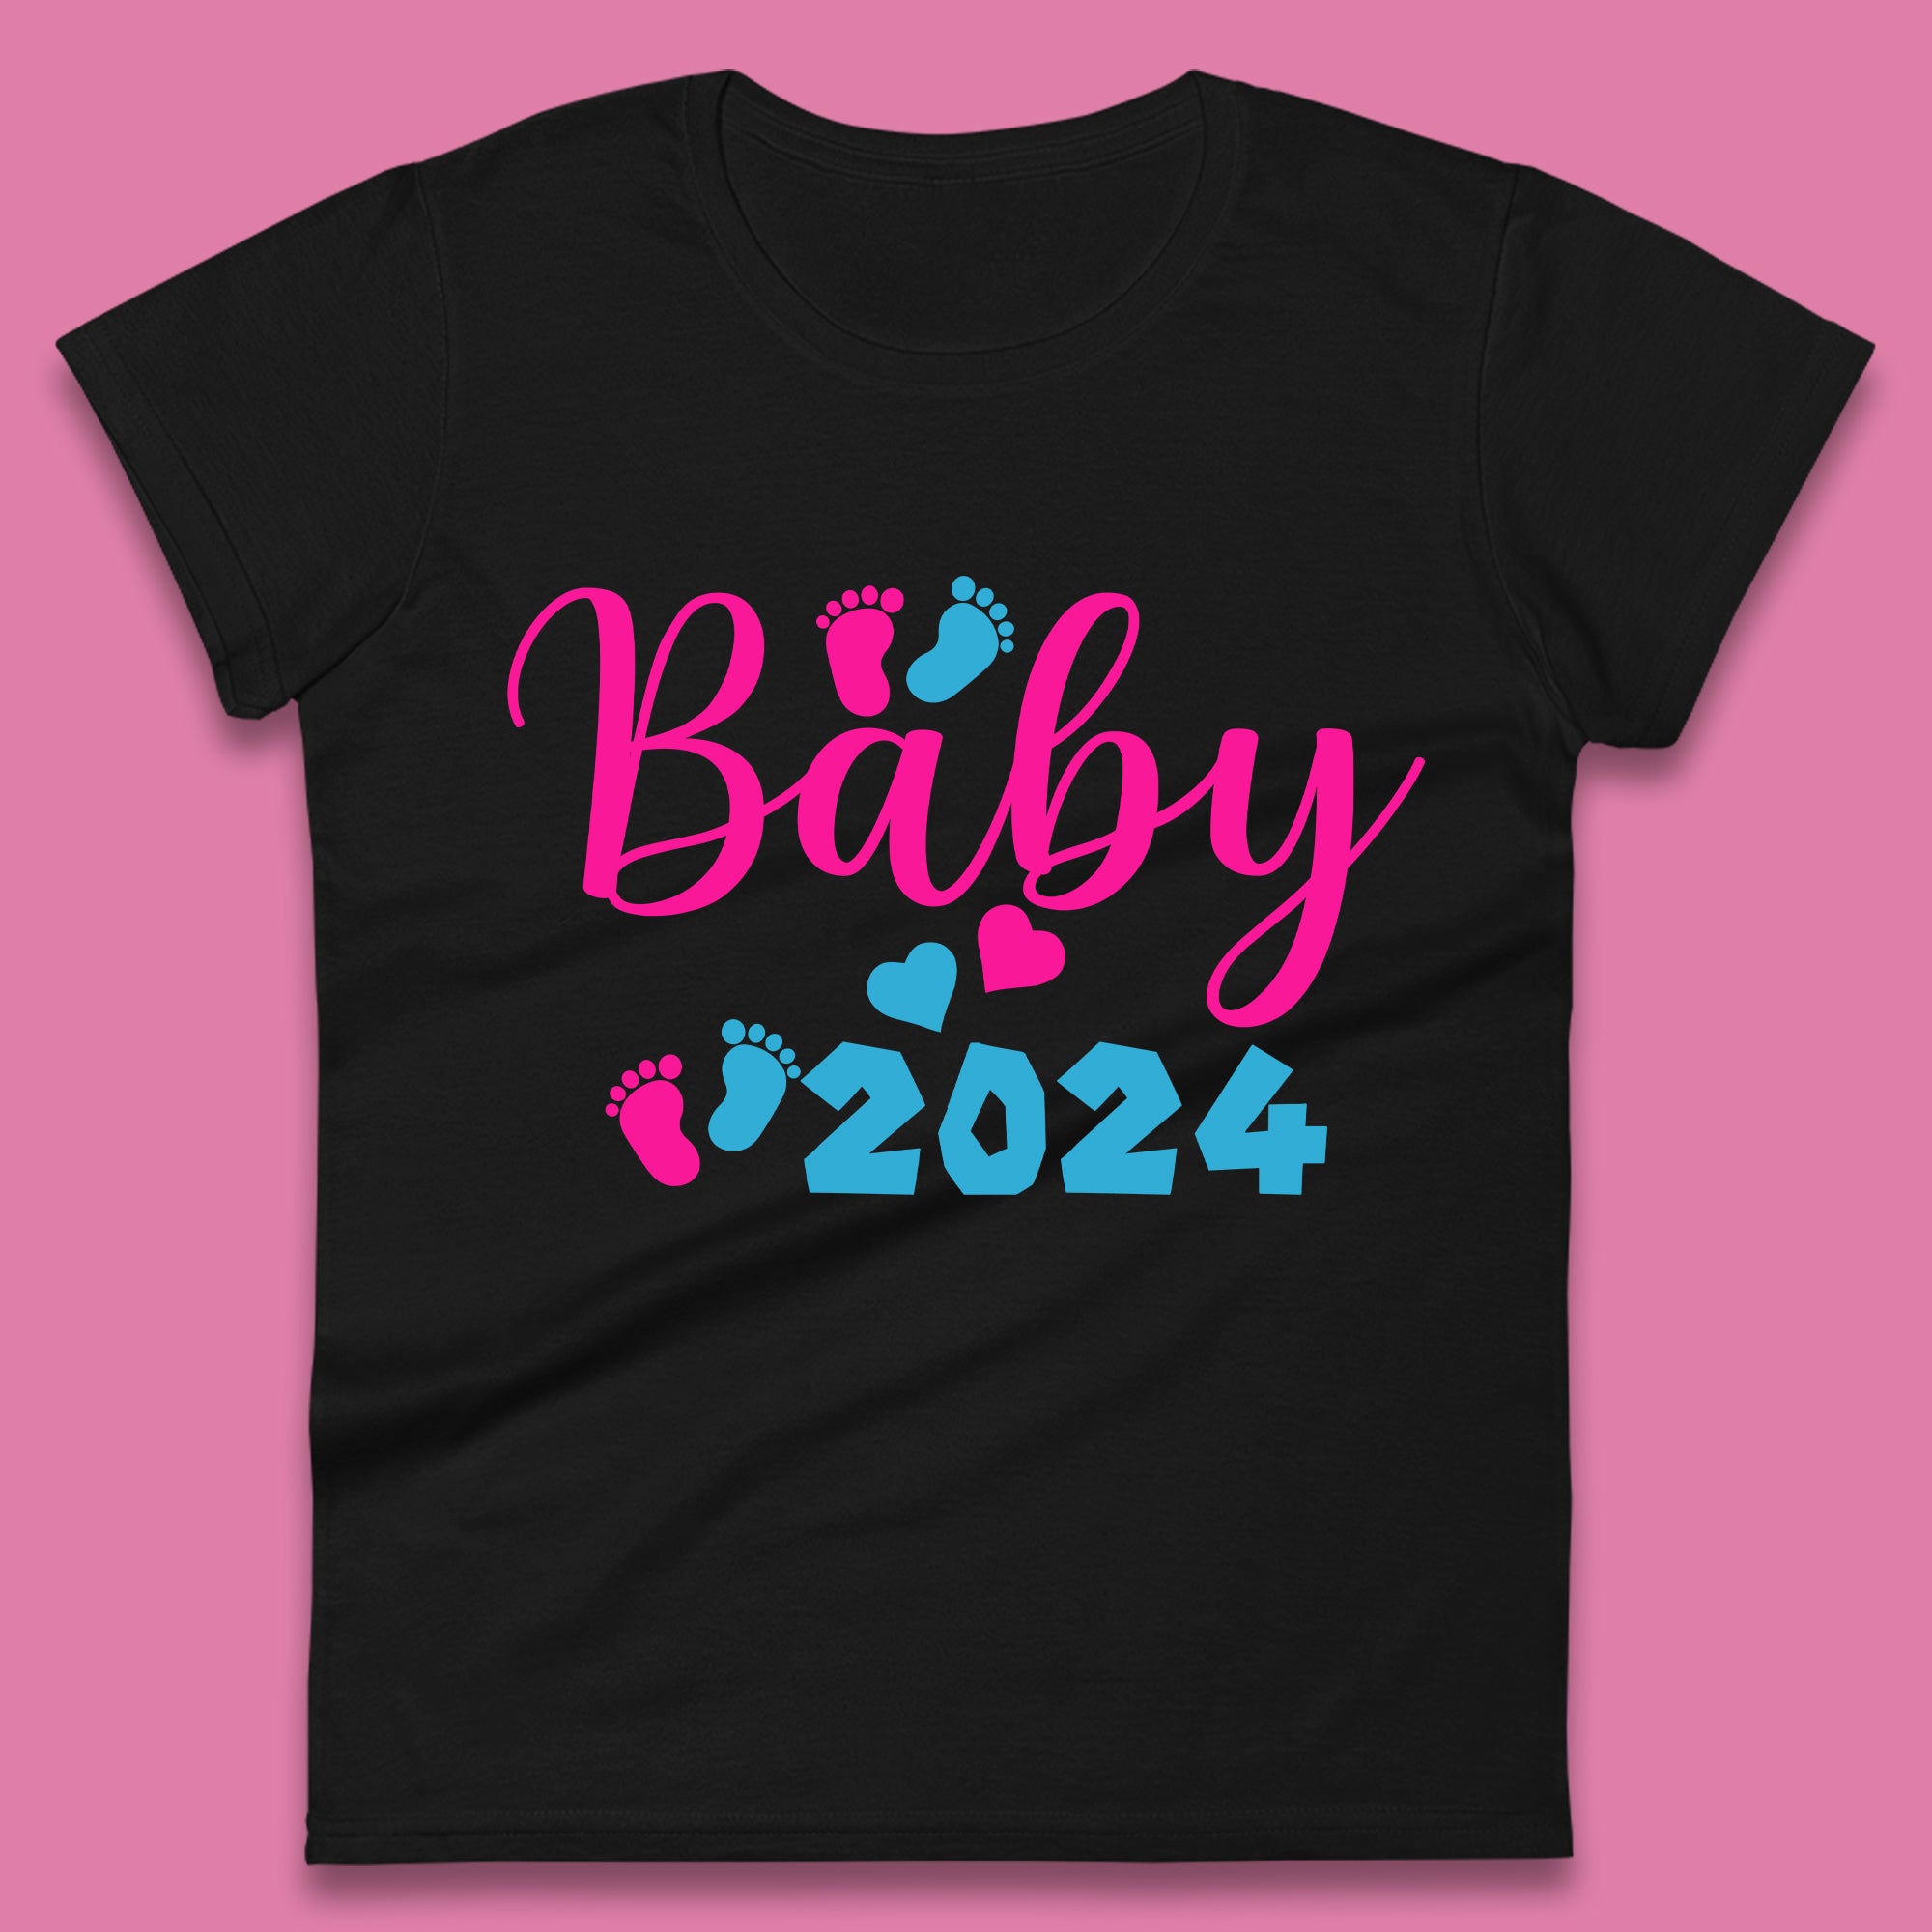 Baby 2024 Pregnancy Announcement Womens T-Shirt